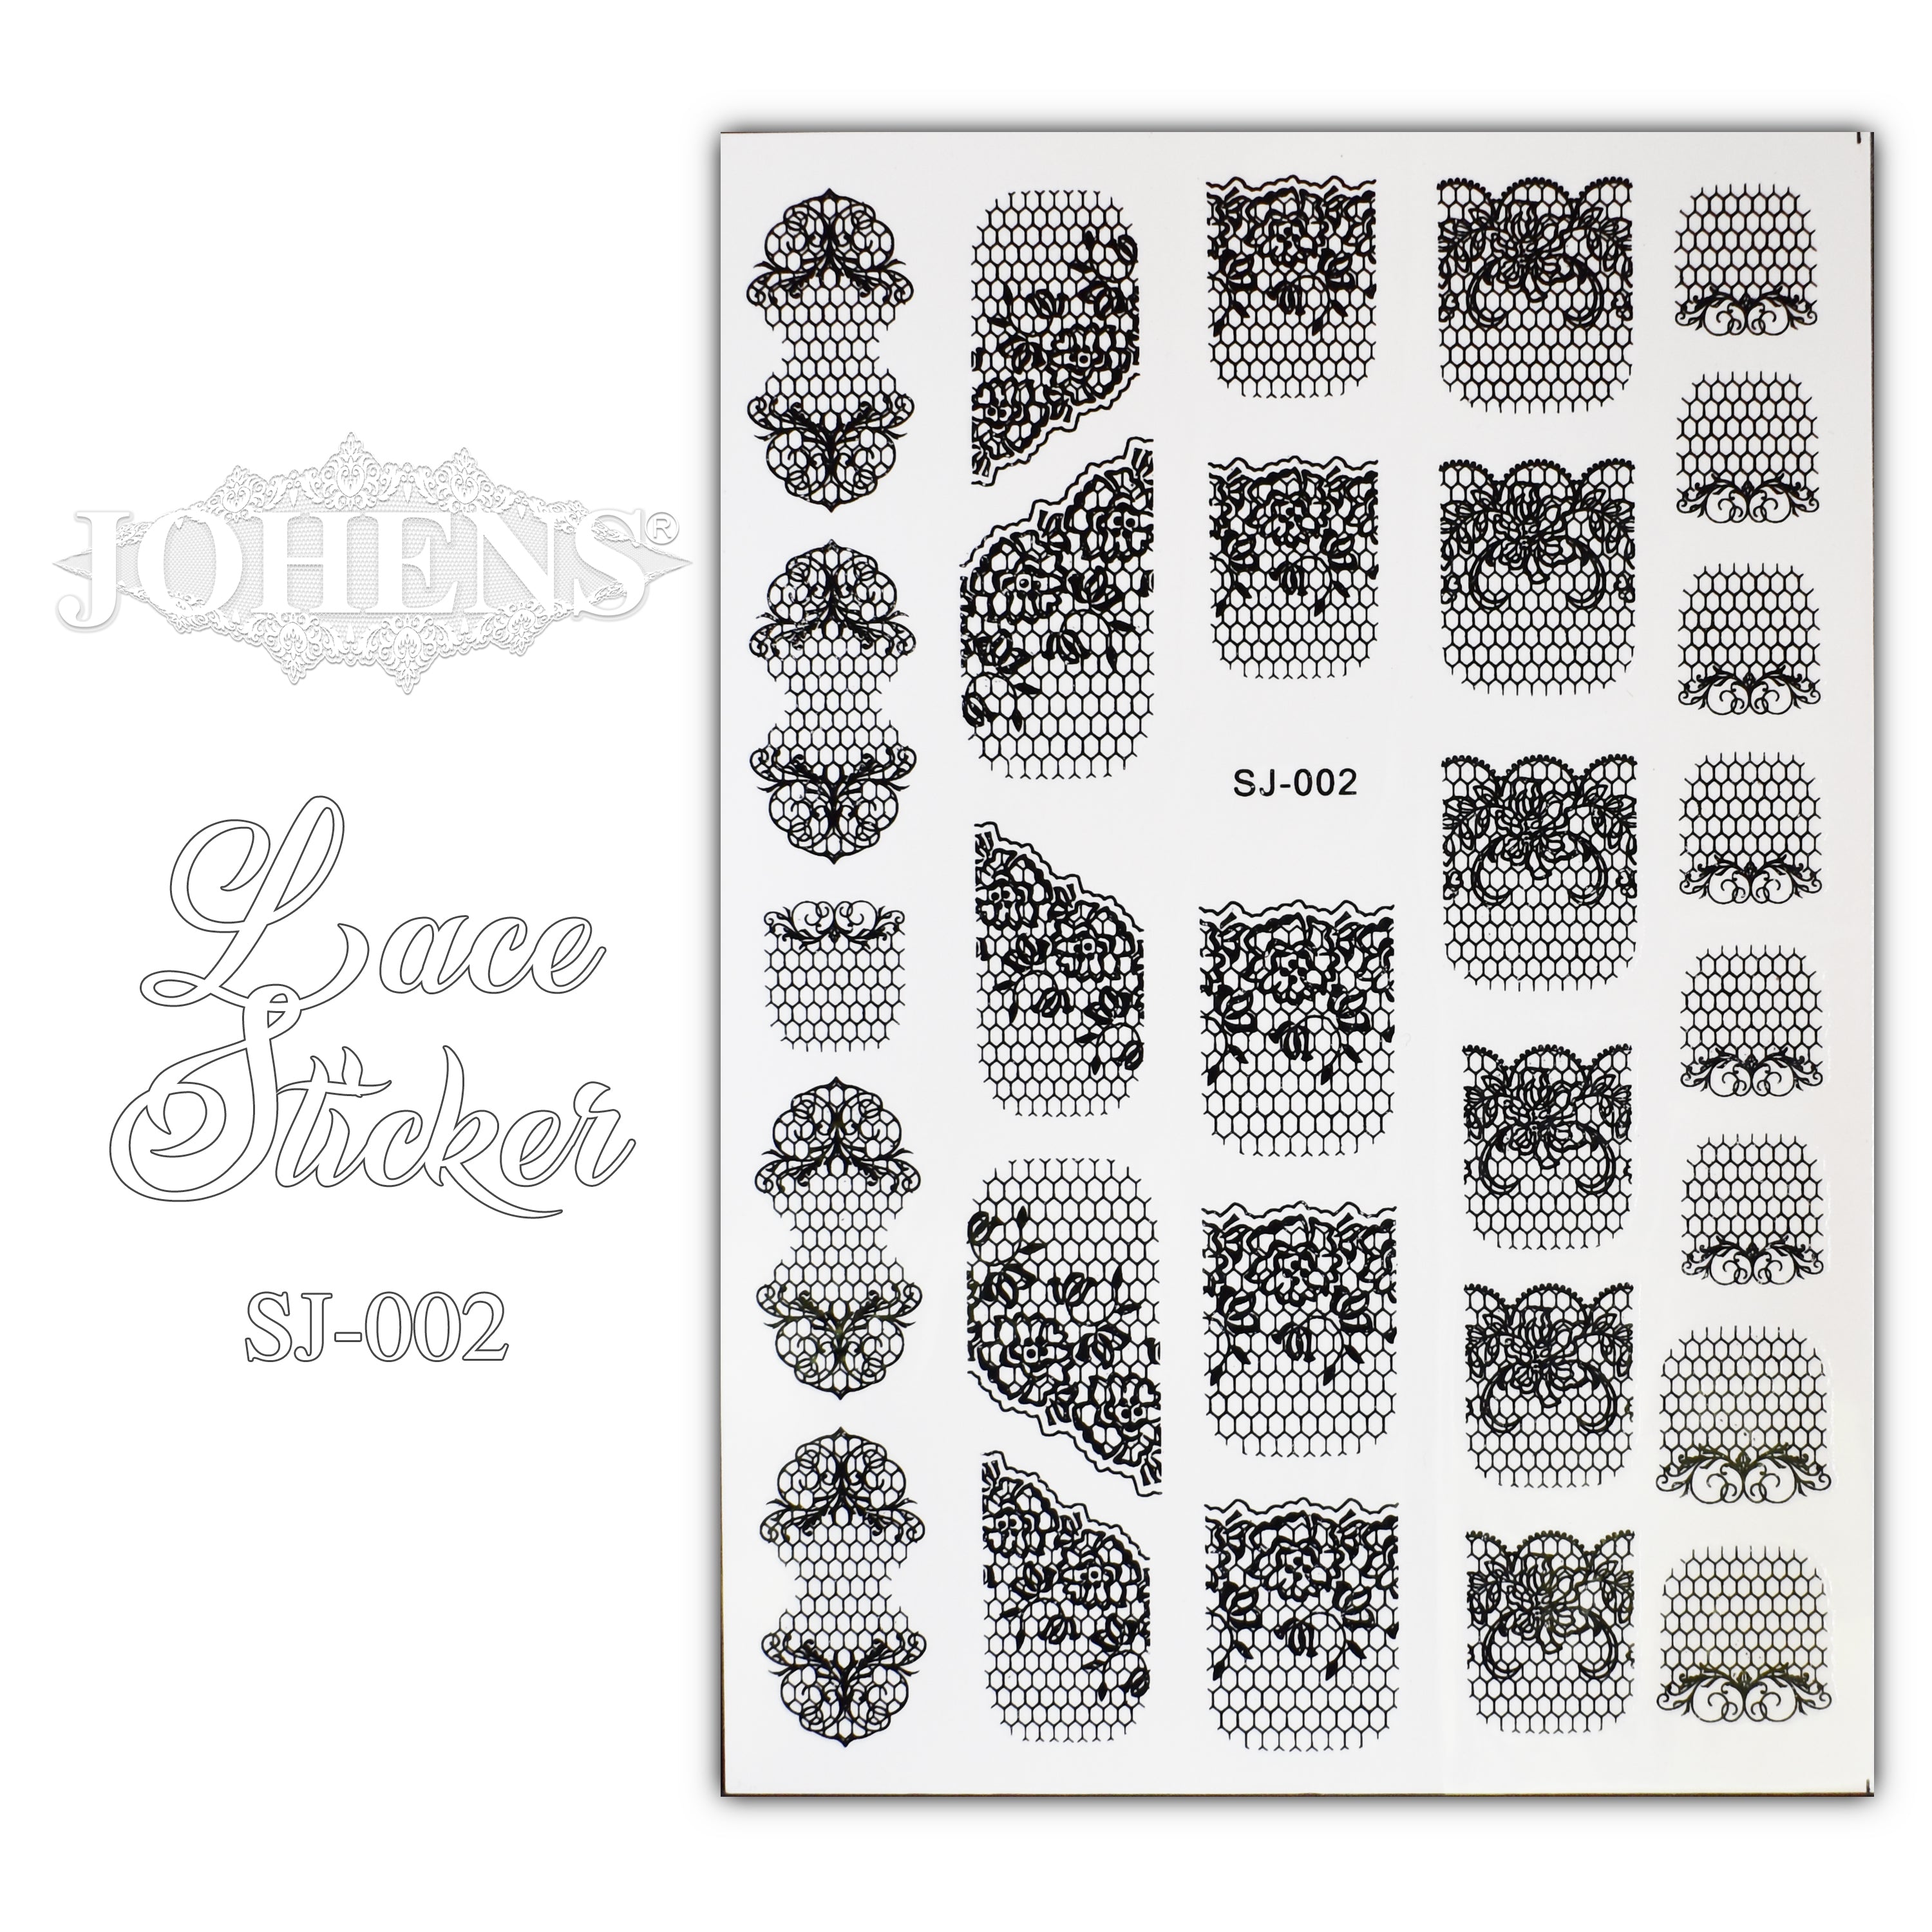 Lace Sticker SJ-002 (water decals)